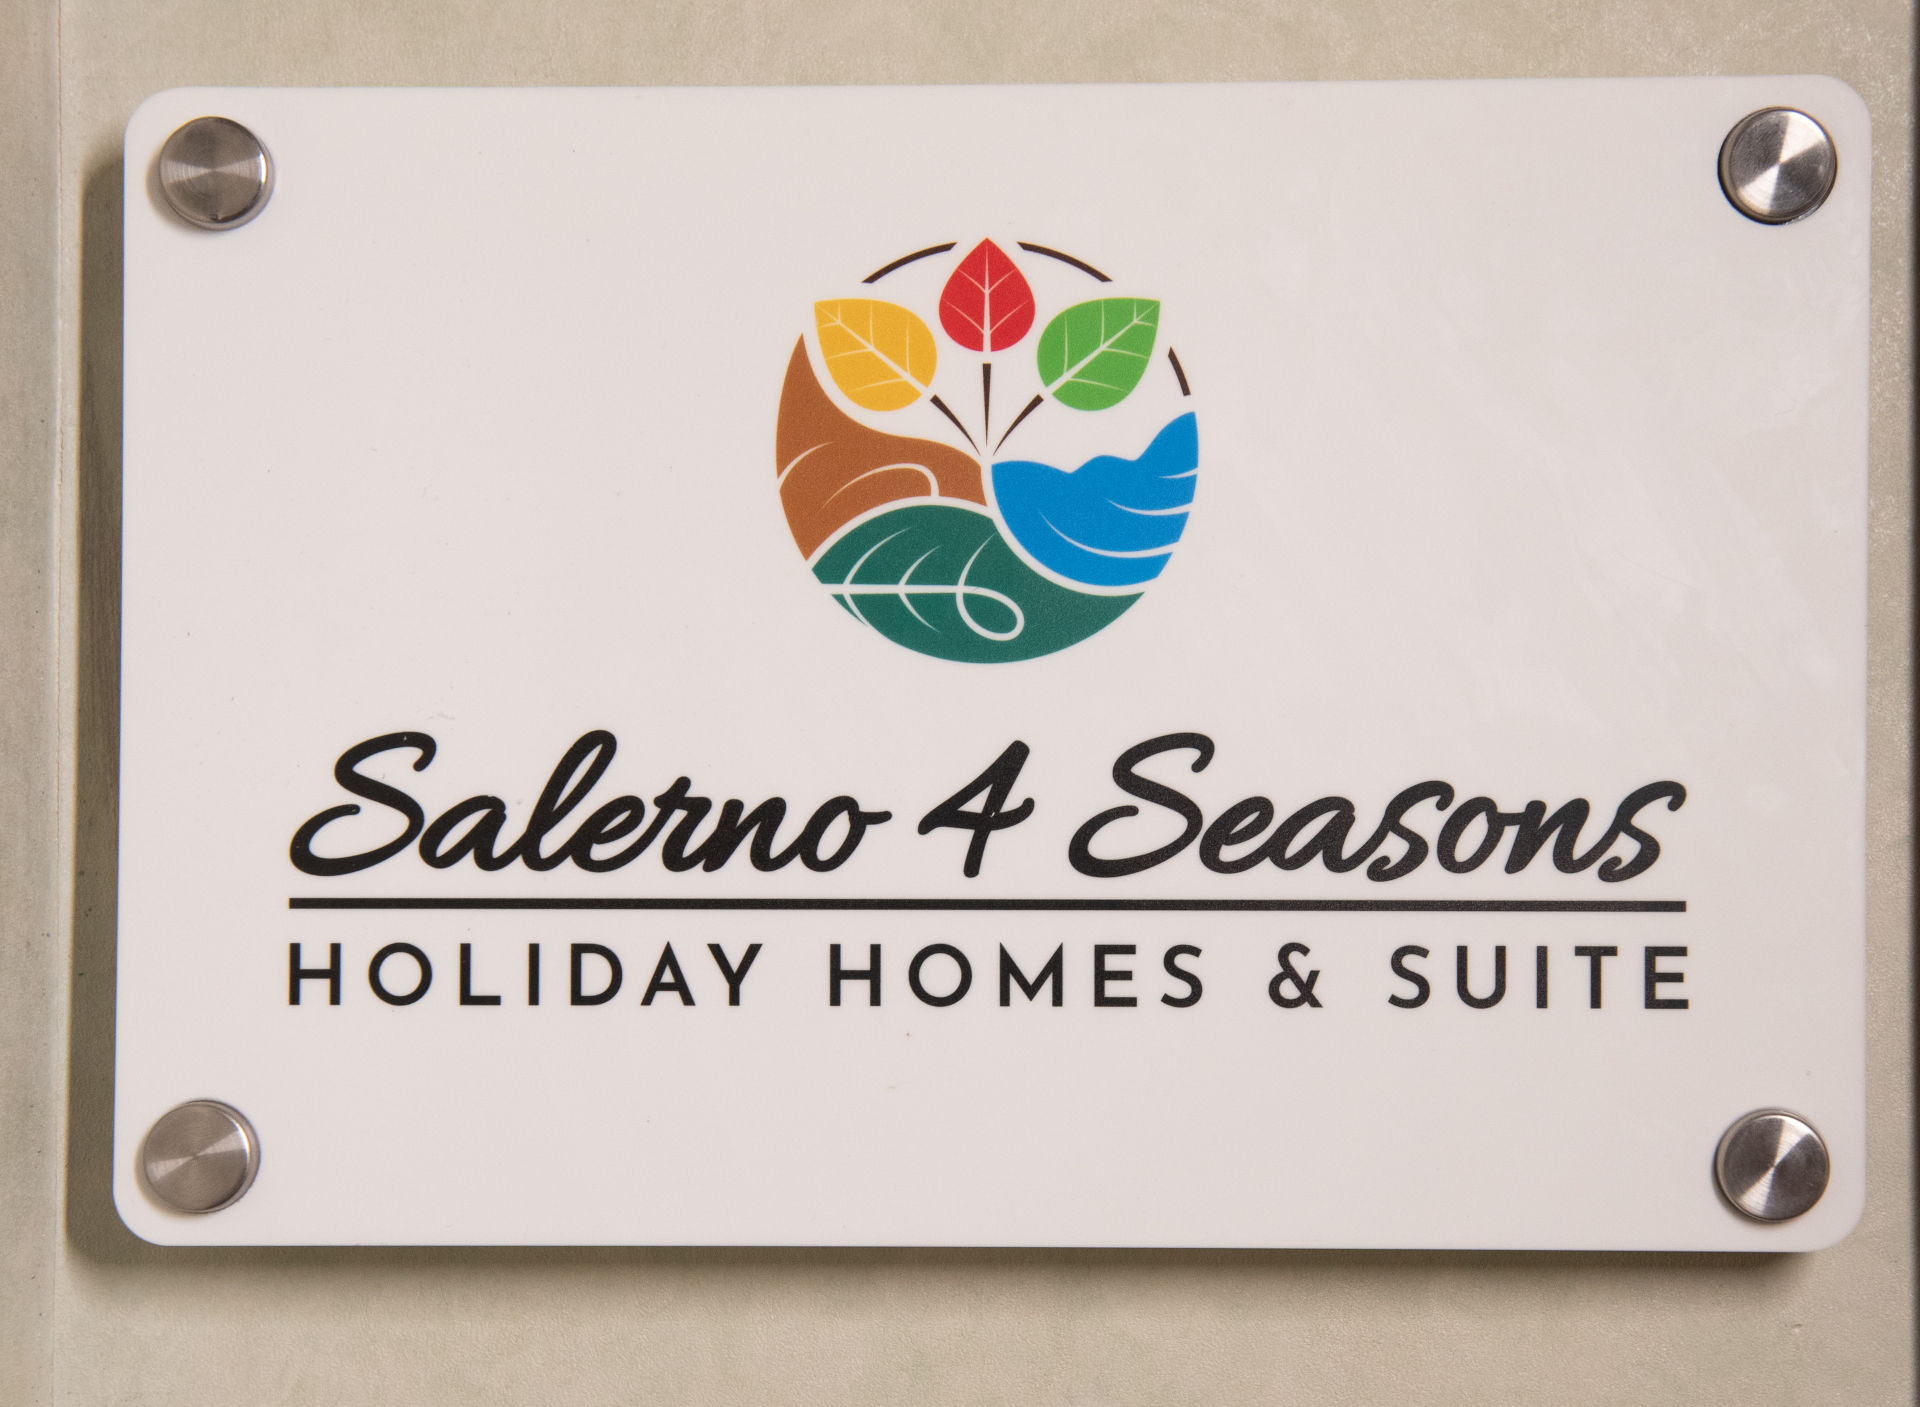 Salerno 4 Seasons - holiday Suites & Homes